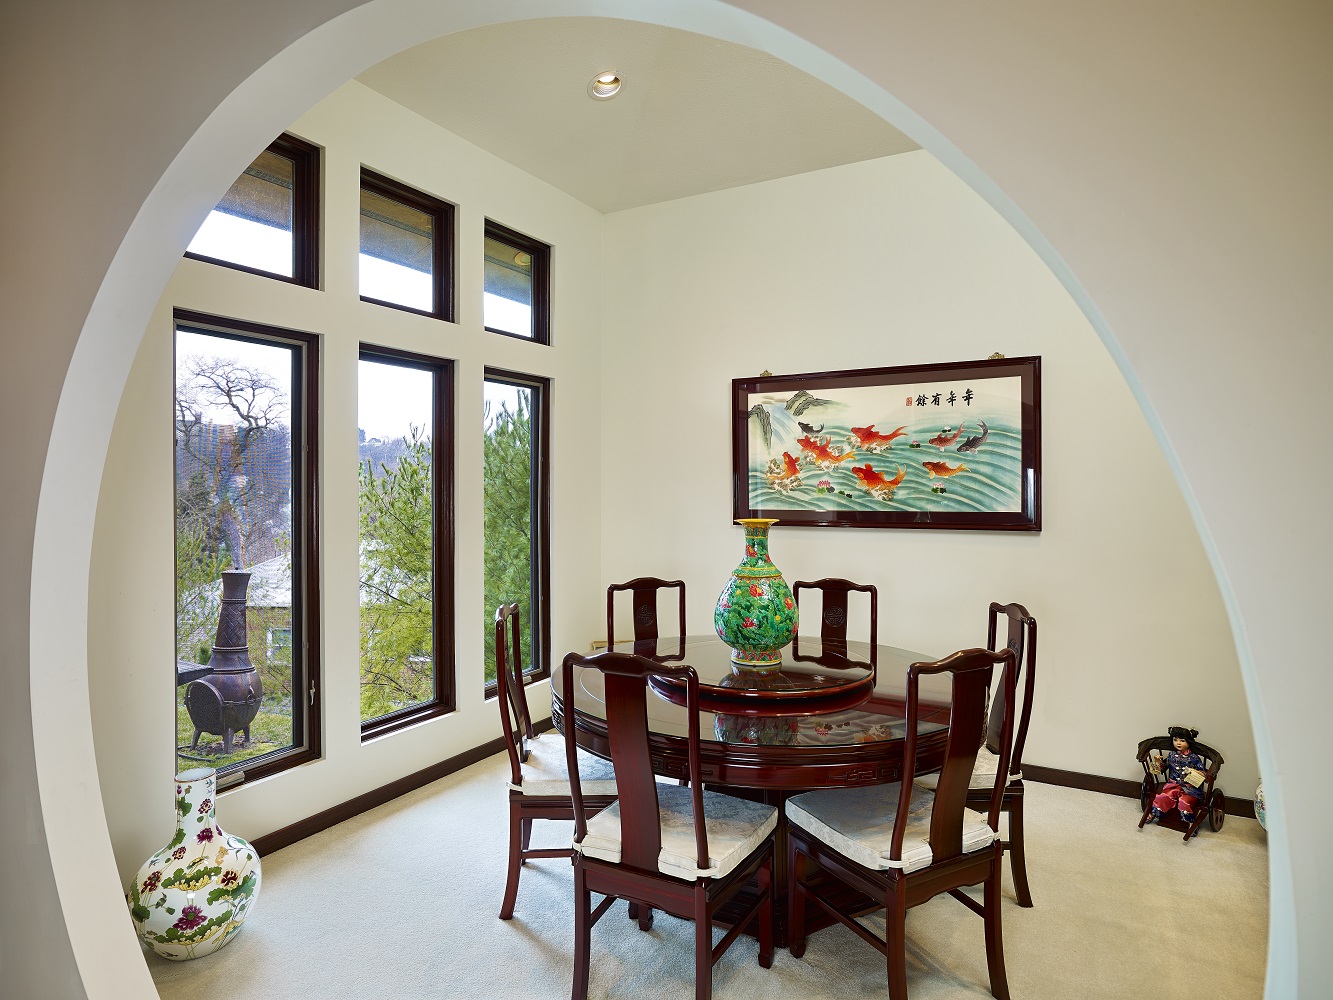 Interior - Dinning Area from Hallway View.jpg